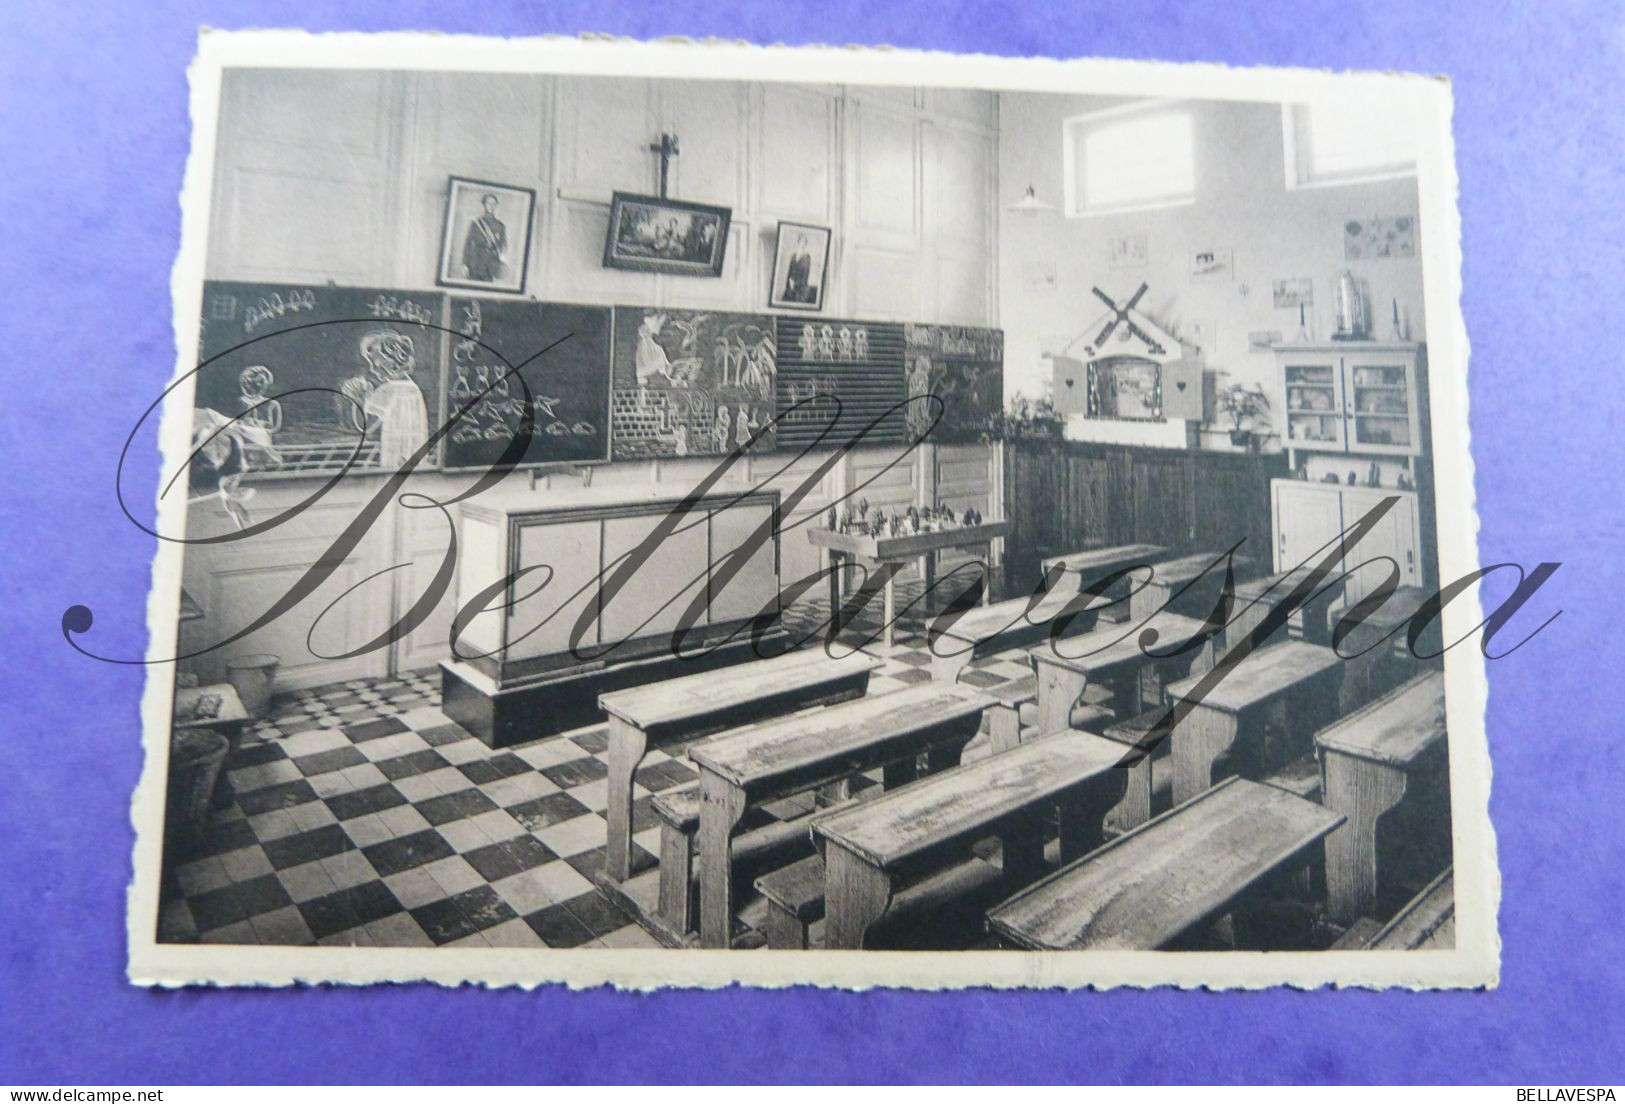 Russeignies Pensionnat St Joseph  12 x cartes postales